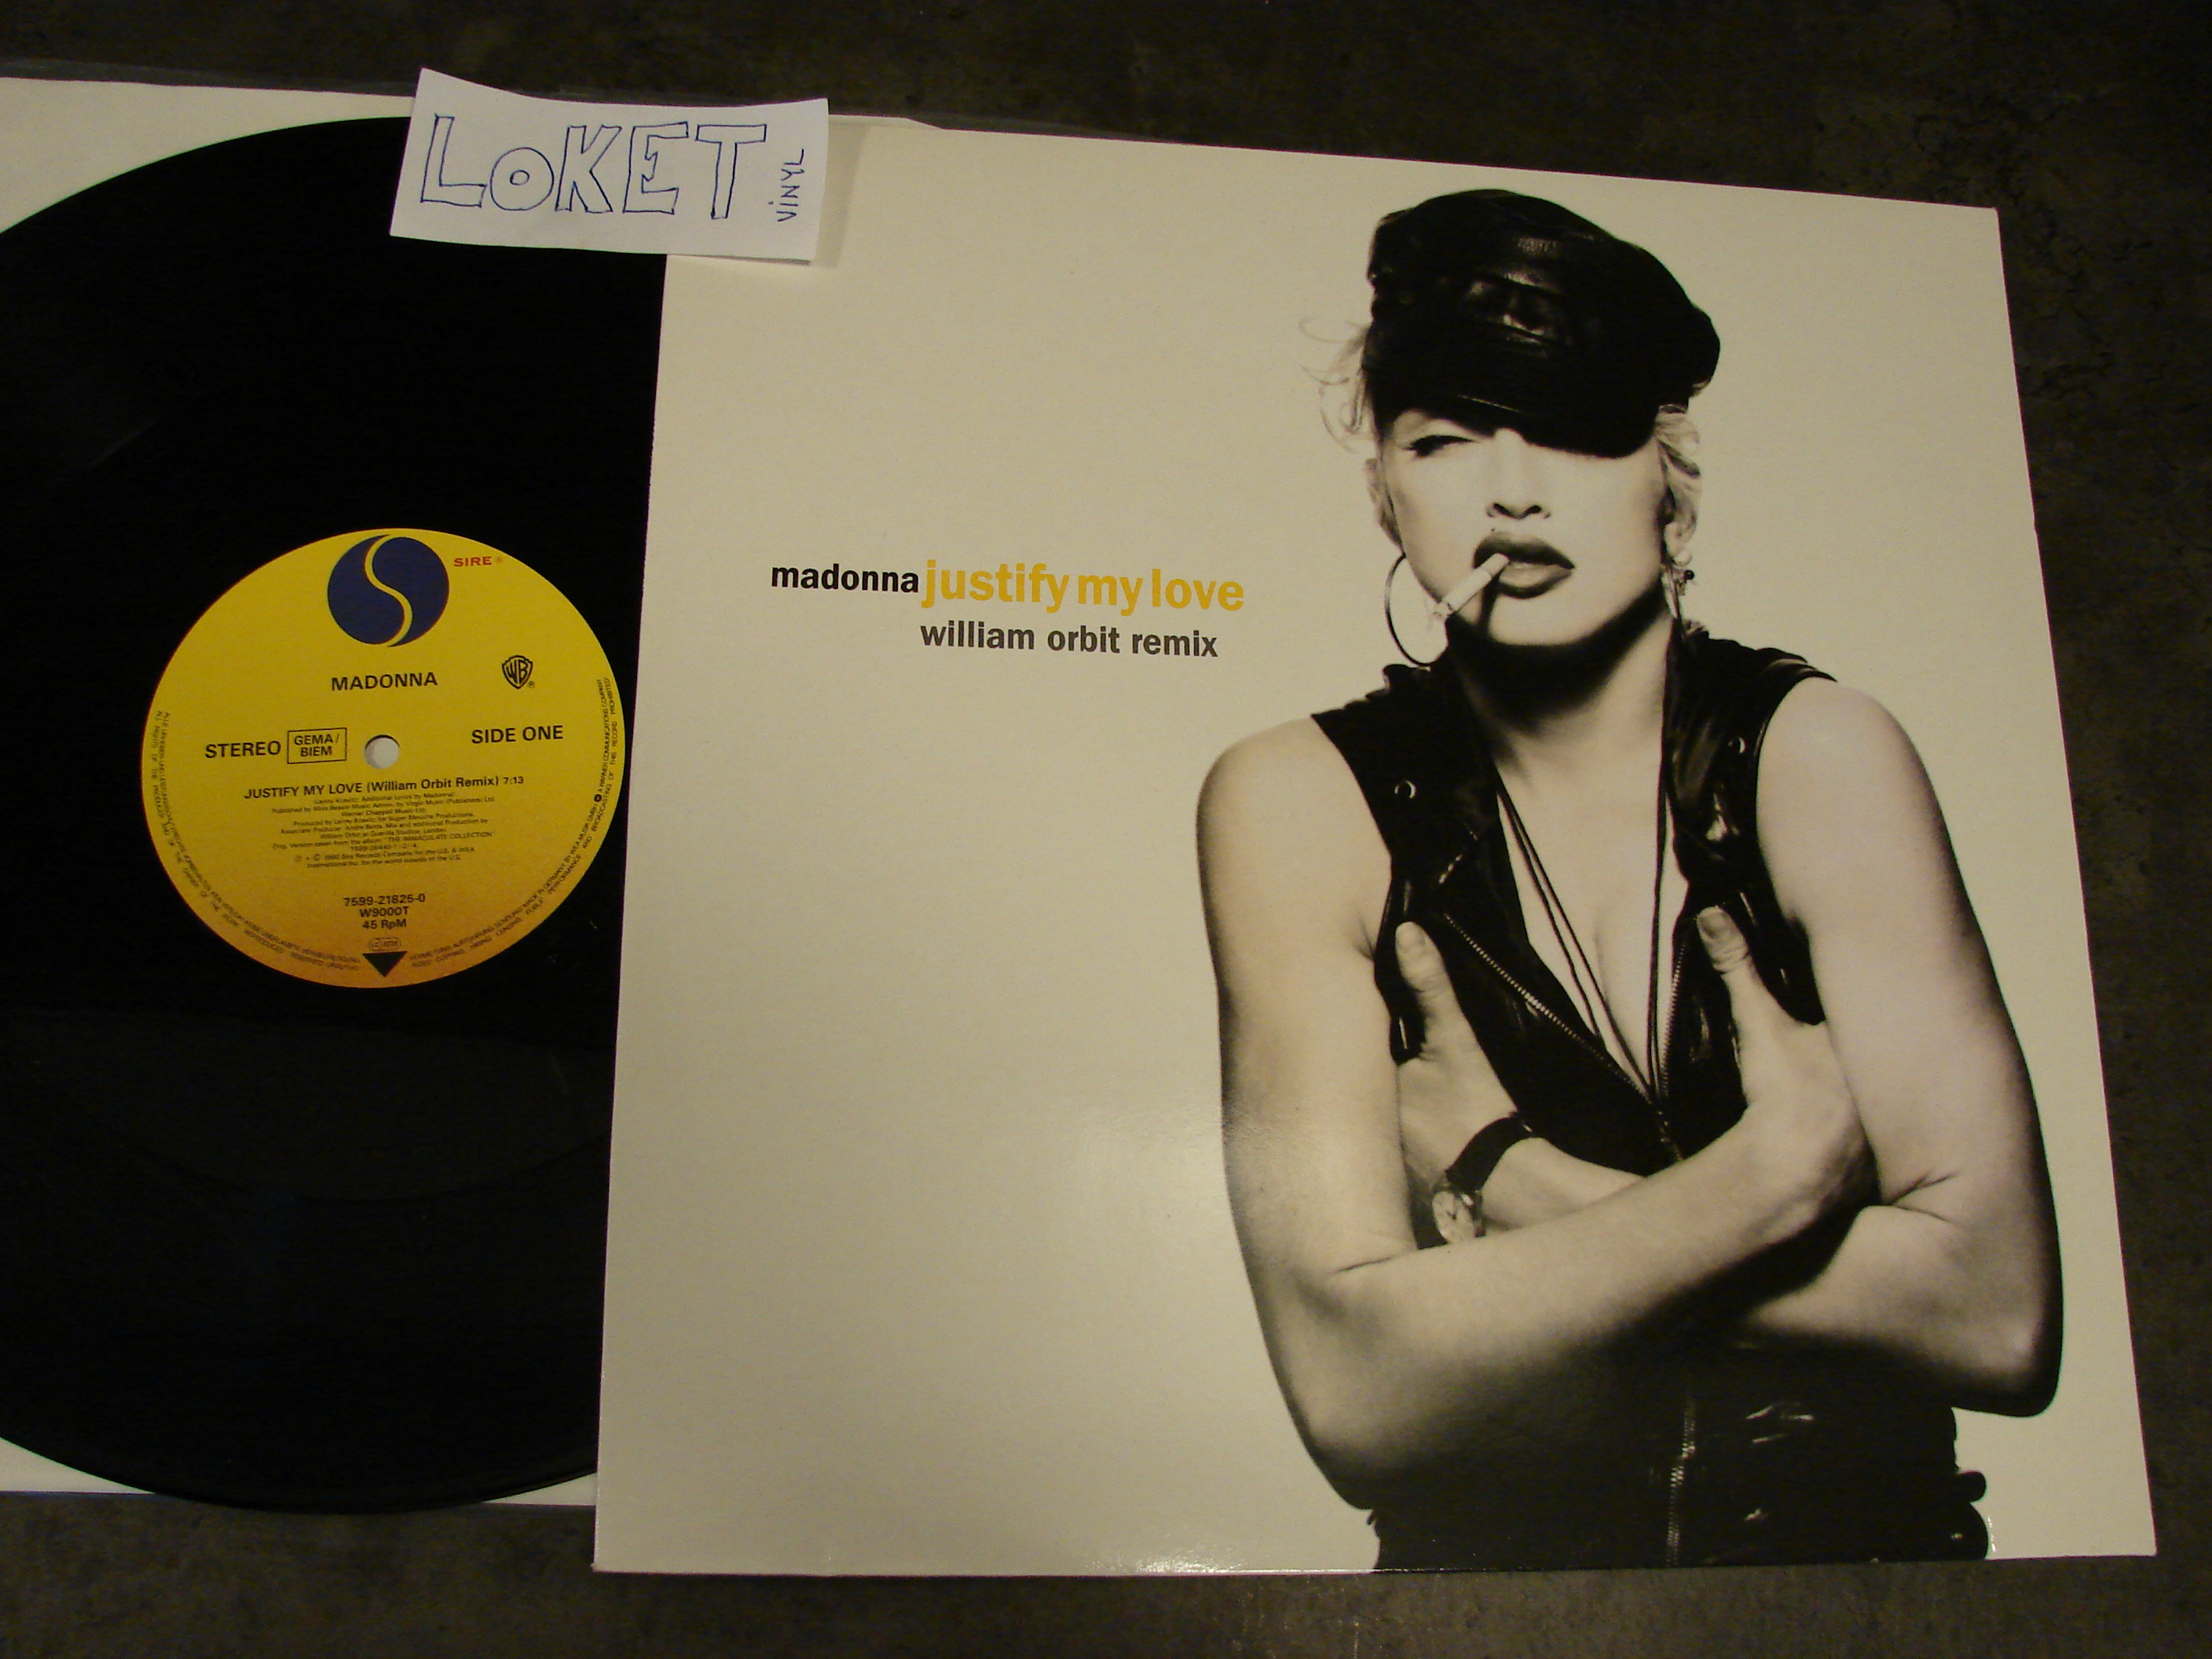 Madonna-Justify My Love  William Orbit Remix-12INCH VINYL-FLAC-1990-LoKET Download